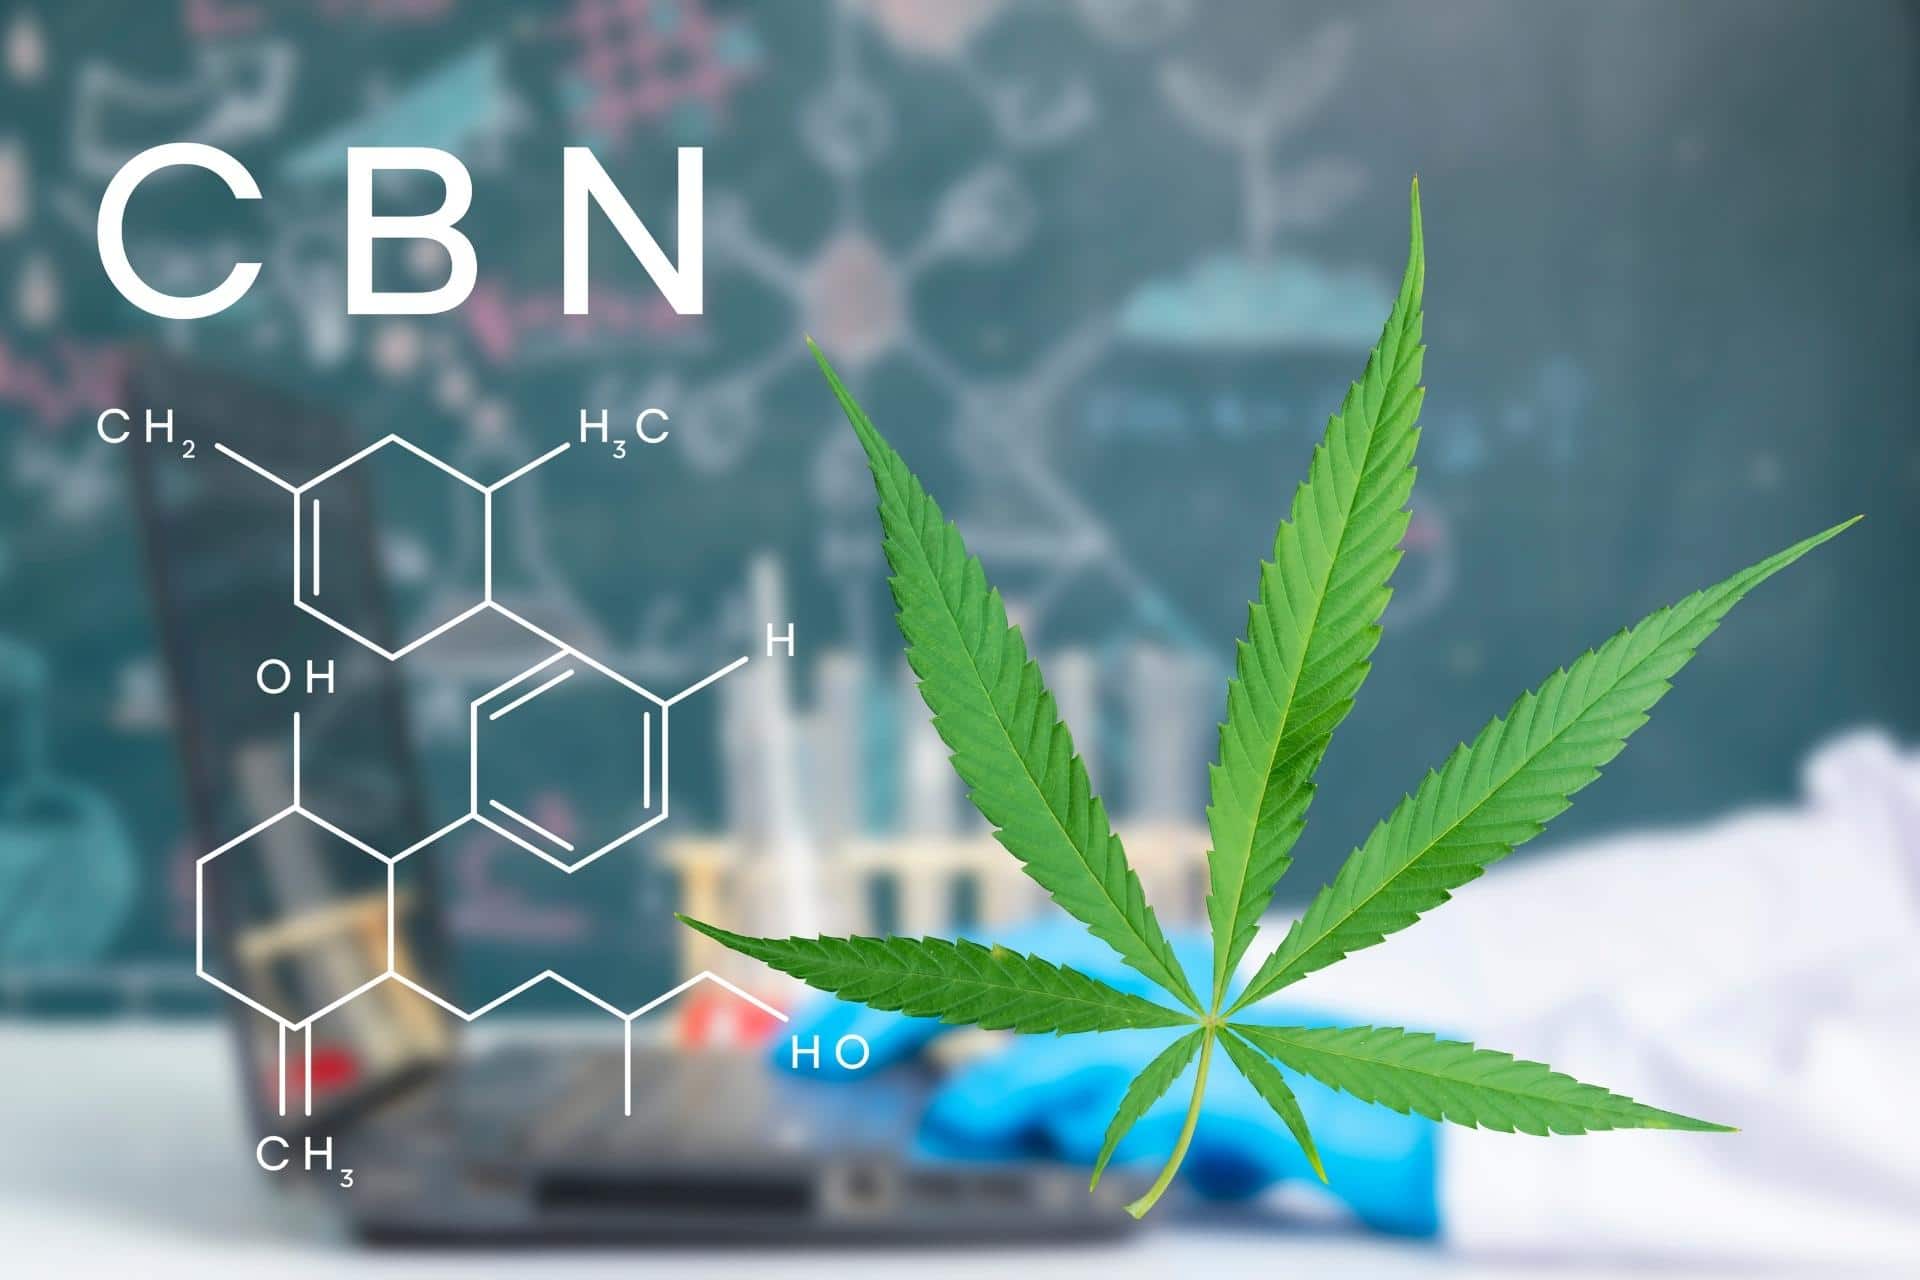 The CBN cannabinoid molecular structure illustration next to a hemp leaf.